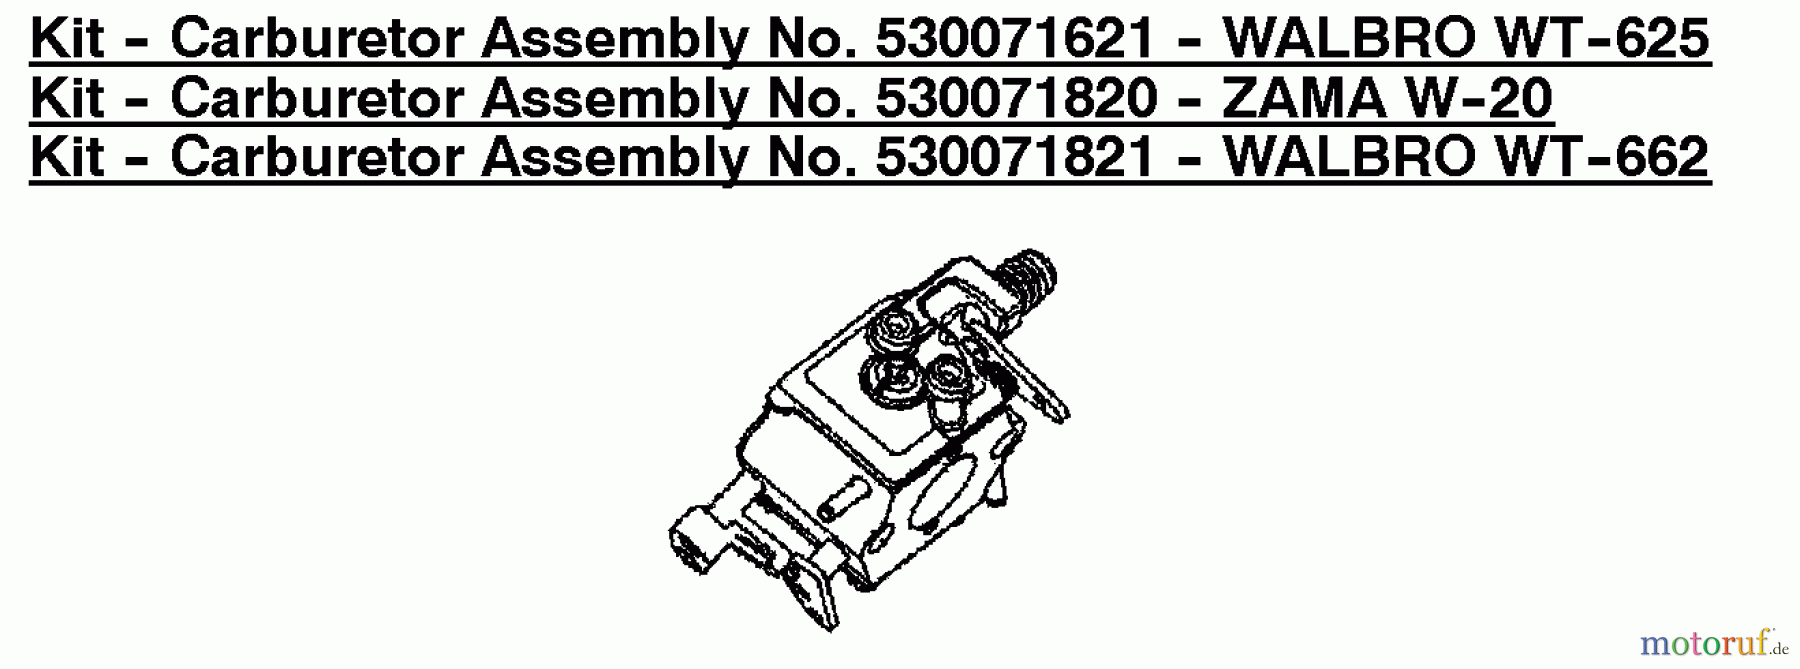  Poulan / Weed Eater Motorsägen PP220 (Type 5) - Poulan Pro Chainsaw Kit - Carburetor Assembly